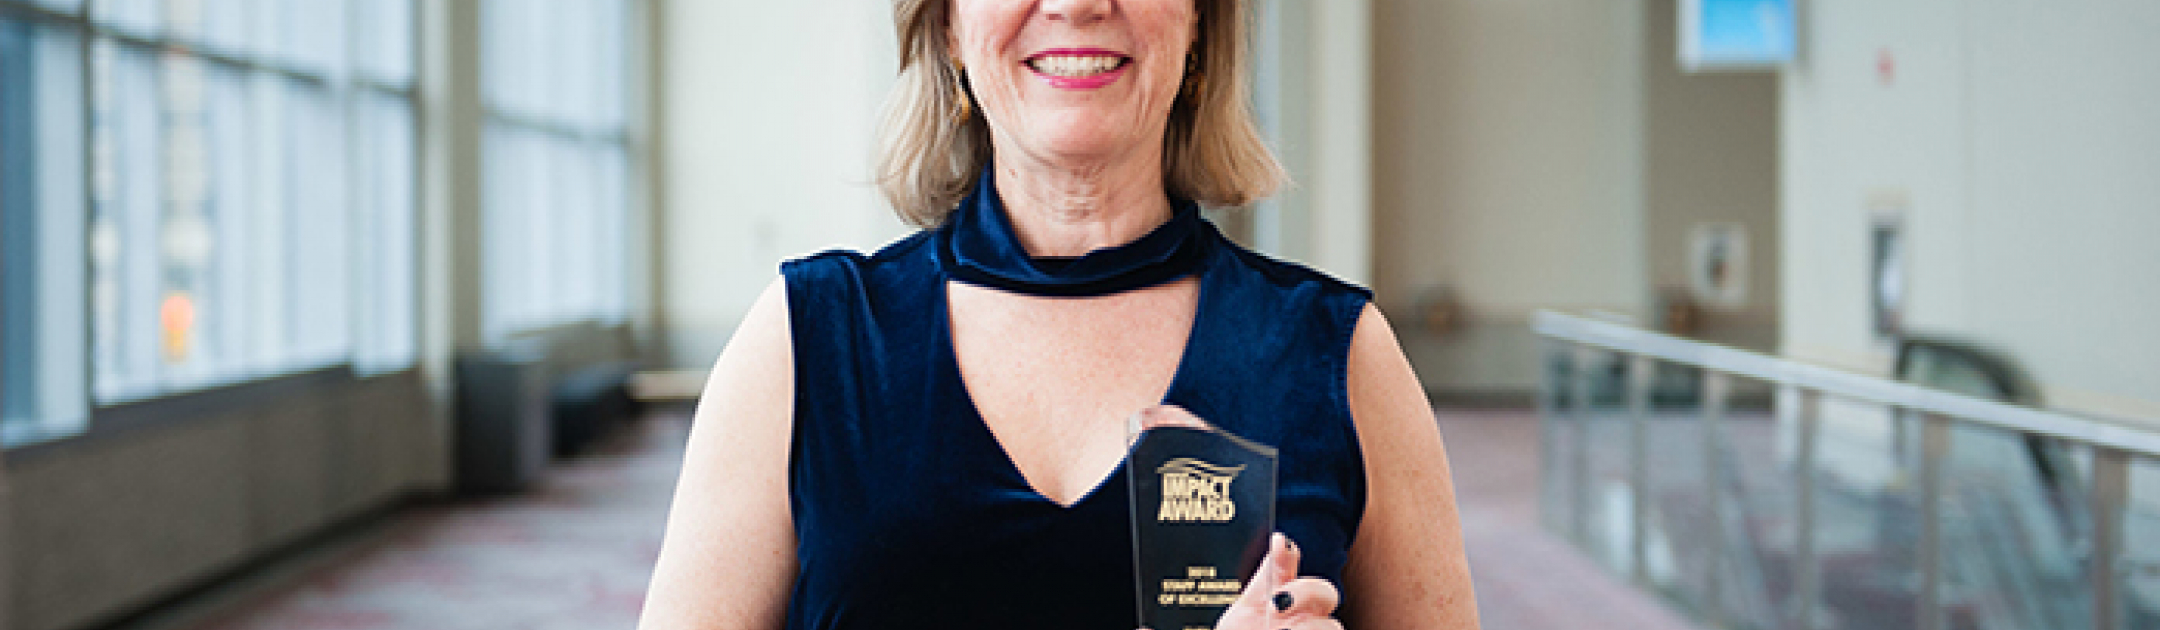 Sheila Fleming with Lawson Impact Award